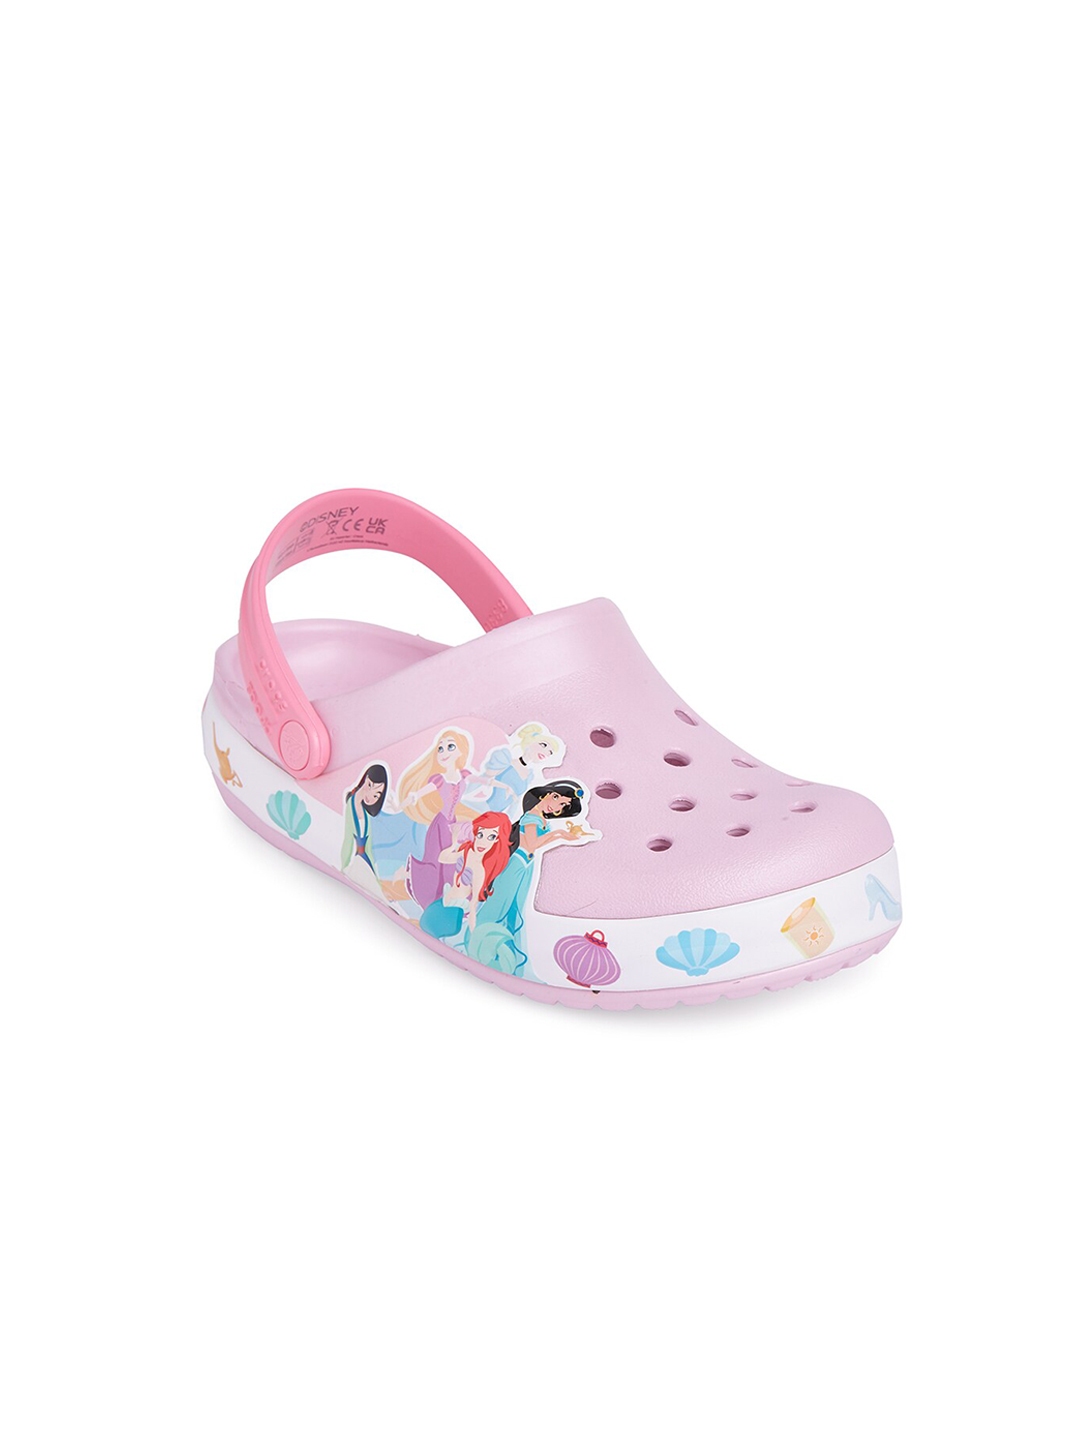 Buy Crocs Girls Pink & Blue Printed Clogs Sandals - Sandals for Girls ...